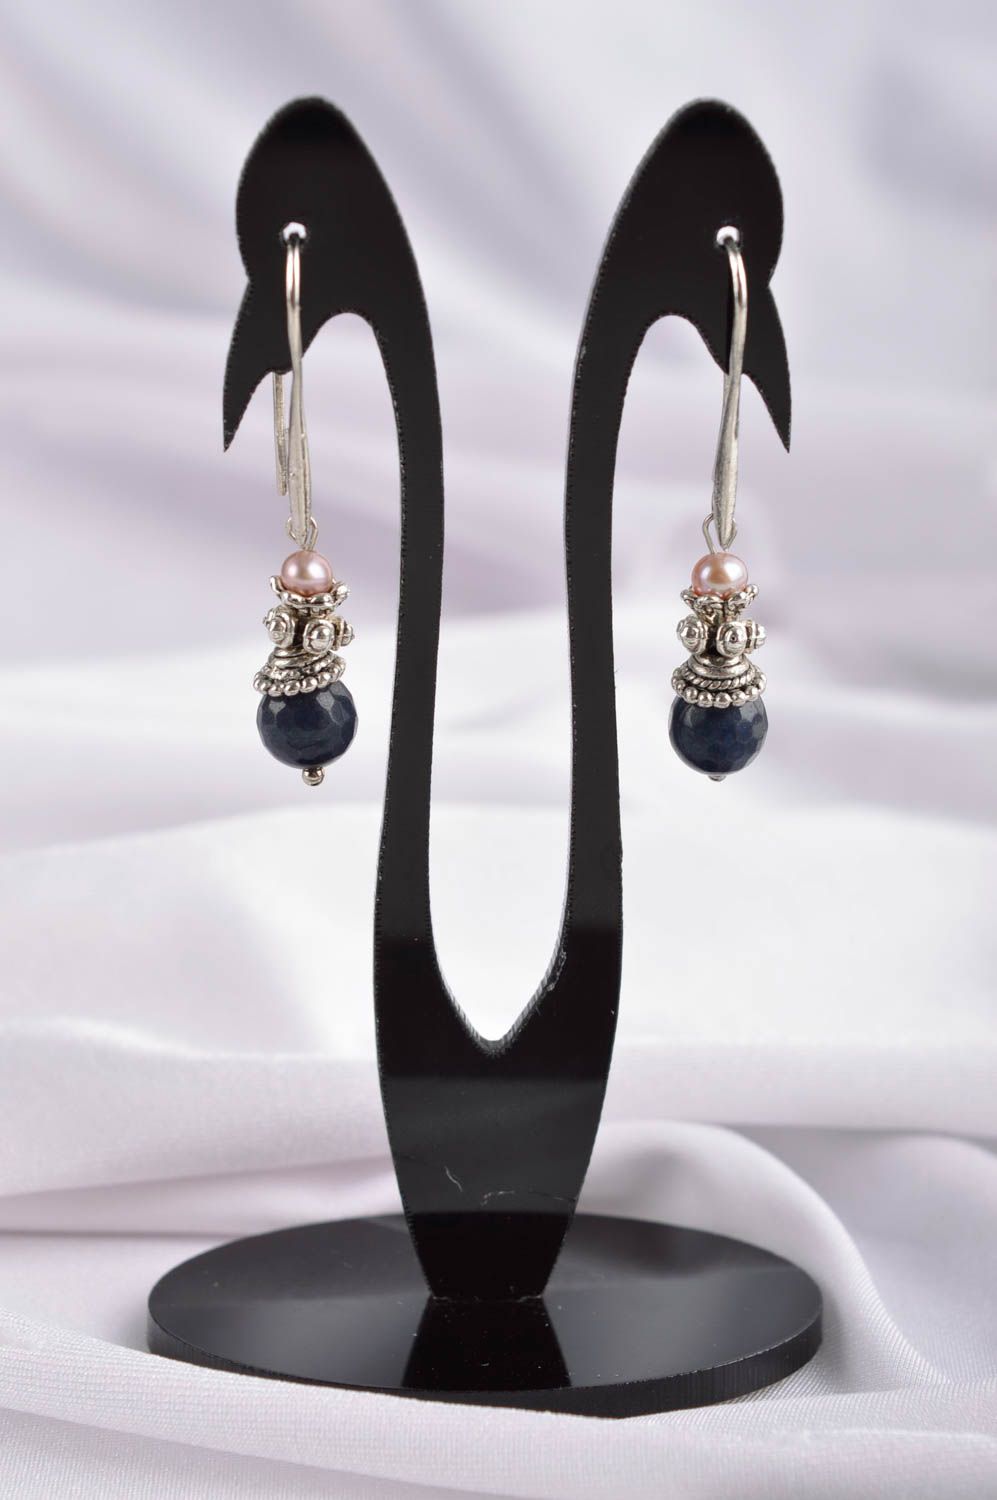 Handmade jewelry stone earrings dangling earrings women accessories gift for her photo 1